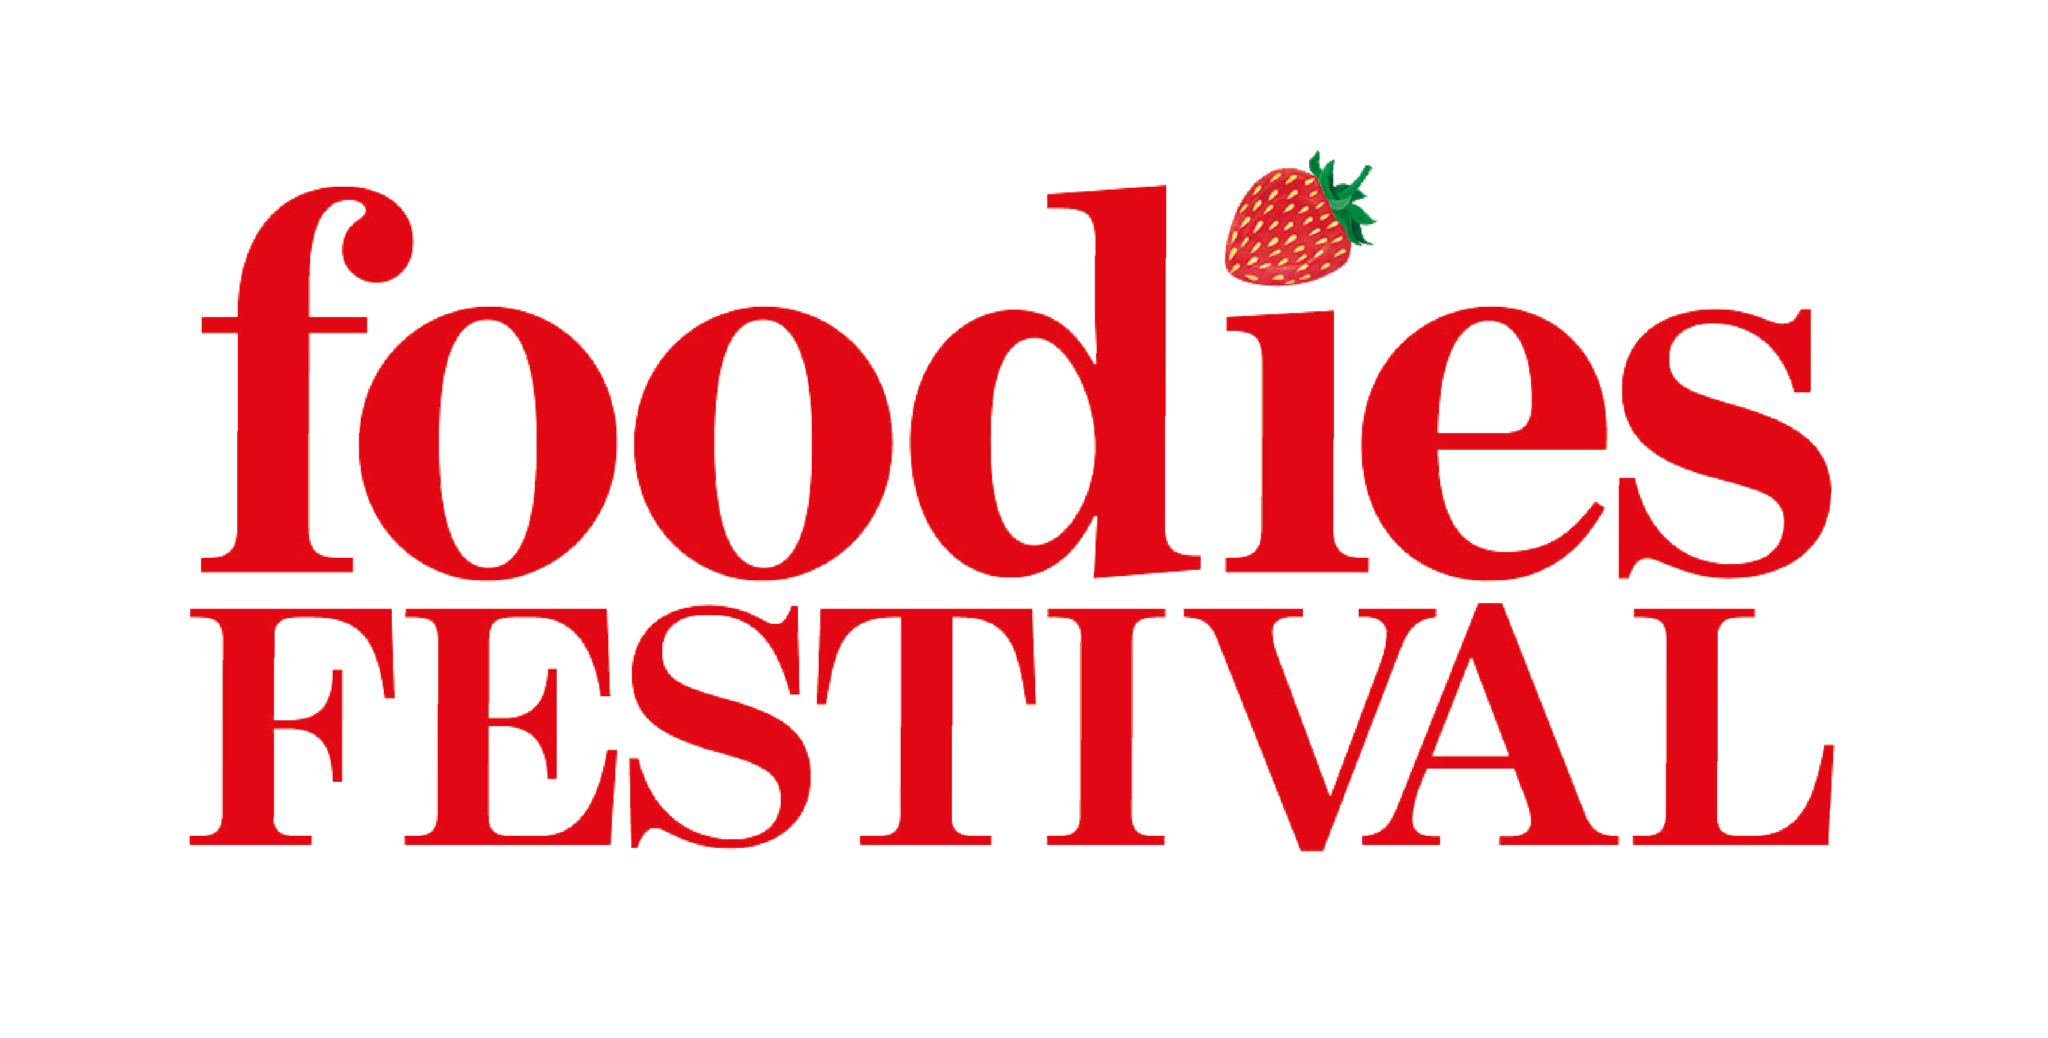 FOODIES FESTIVAL logo